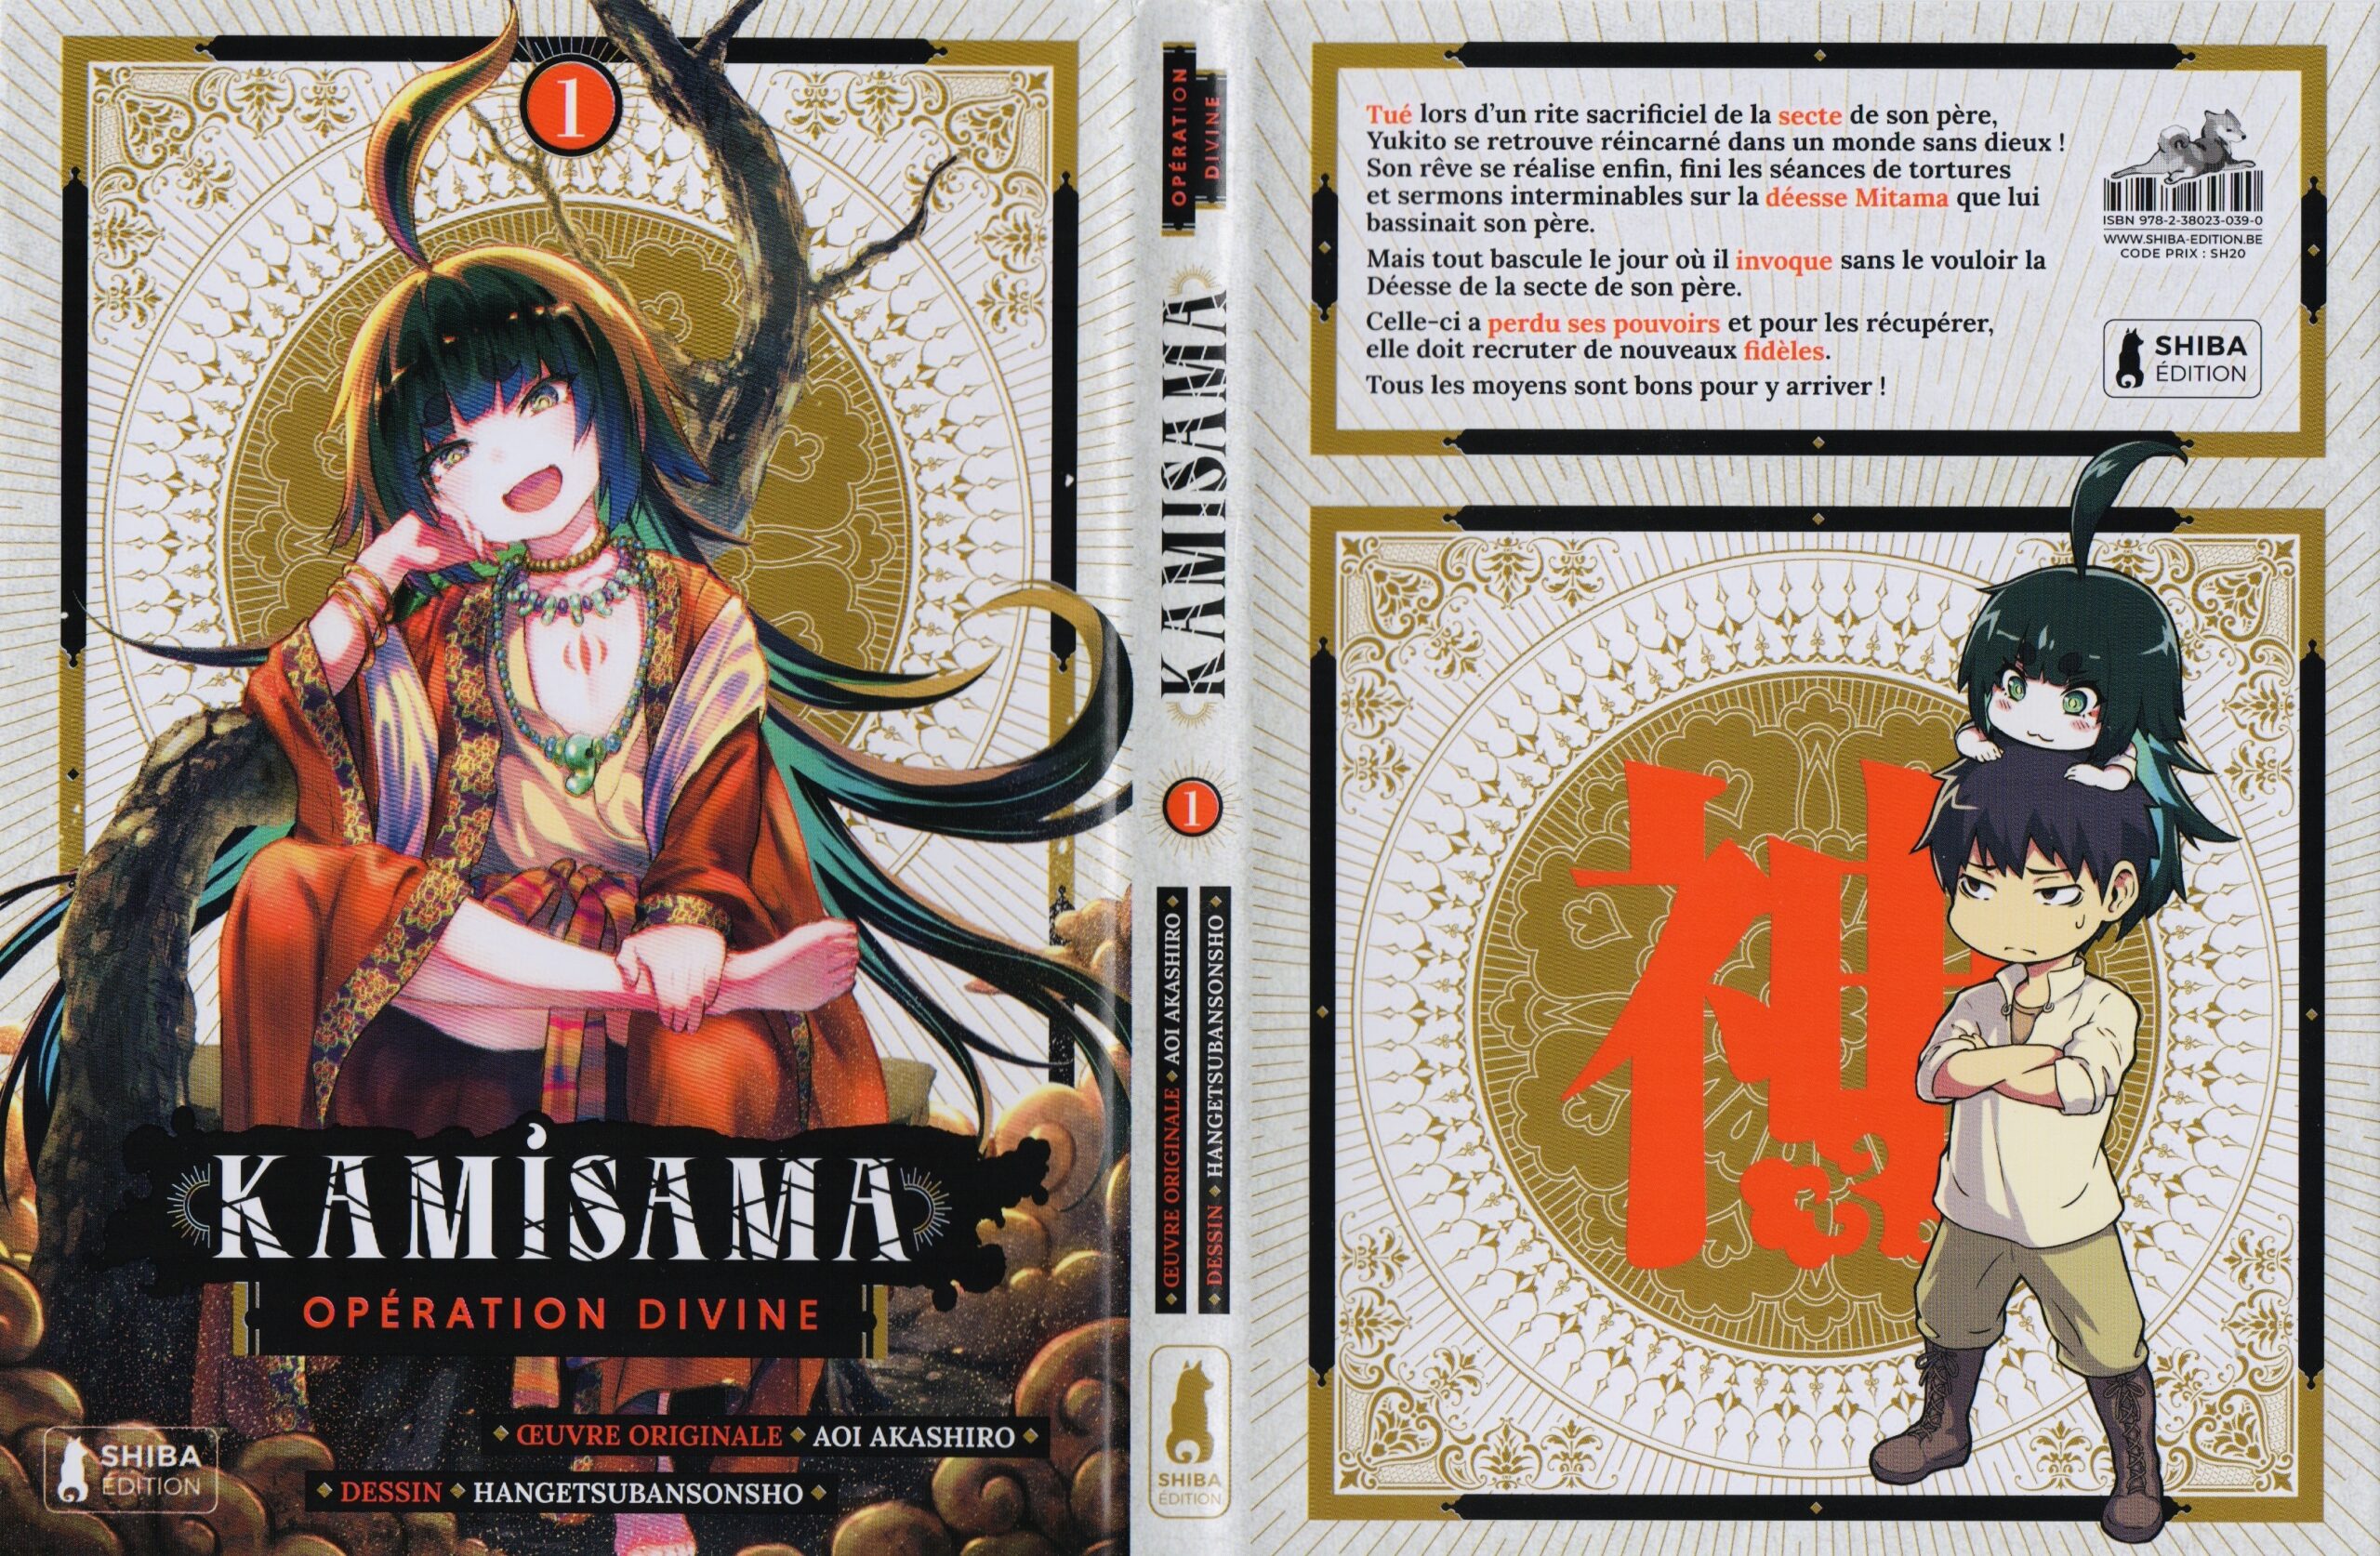 Kamisama Opération Divine, Avis, review, Critique, Tome 1, Tome 2, Shonen, Ecchi, Isekai, Shiba édition, Kamikatsu